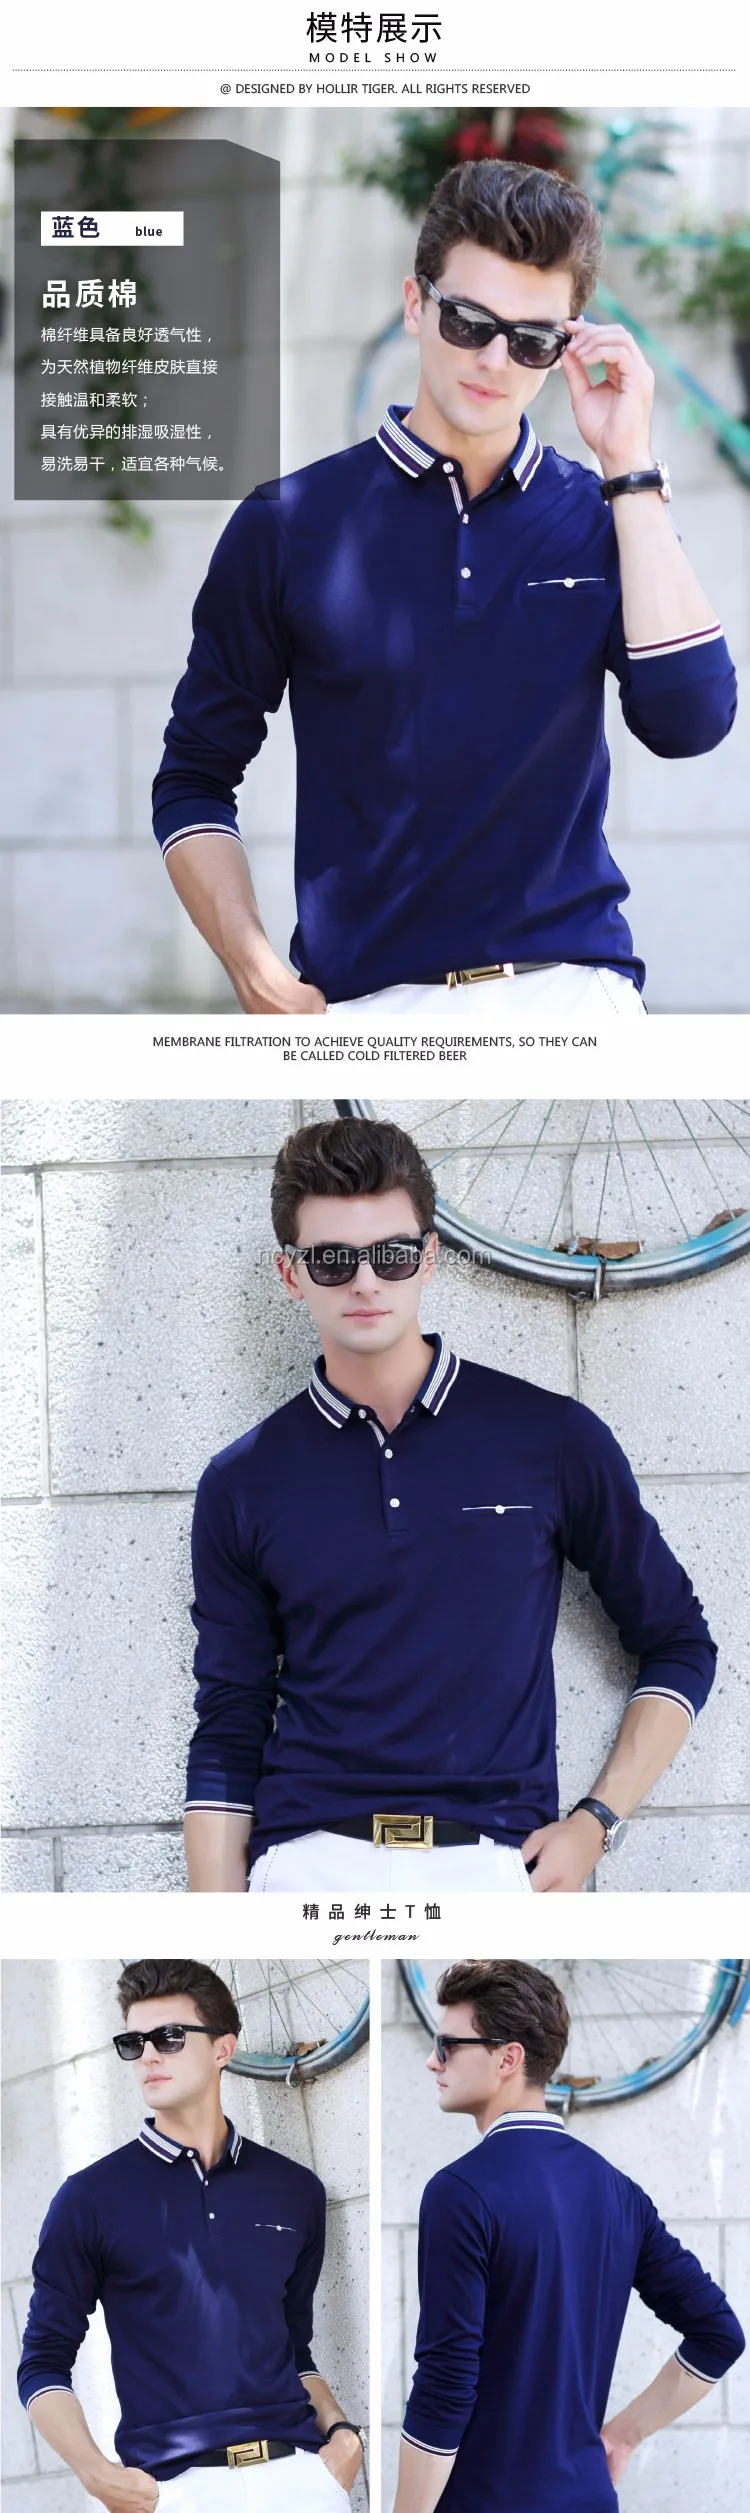 polo shirts for men long sleeve10.jpg